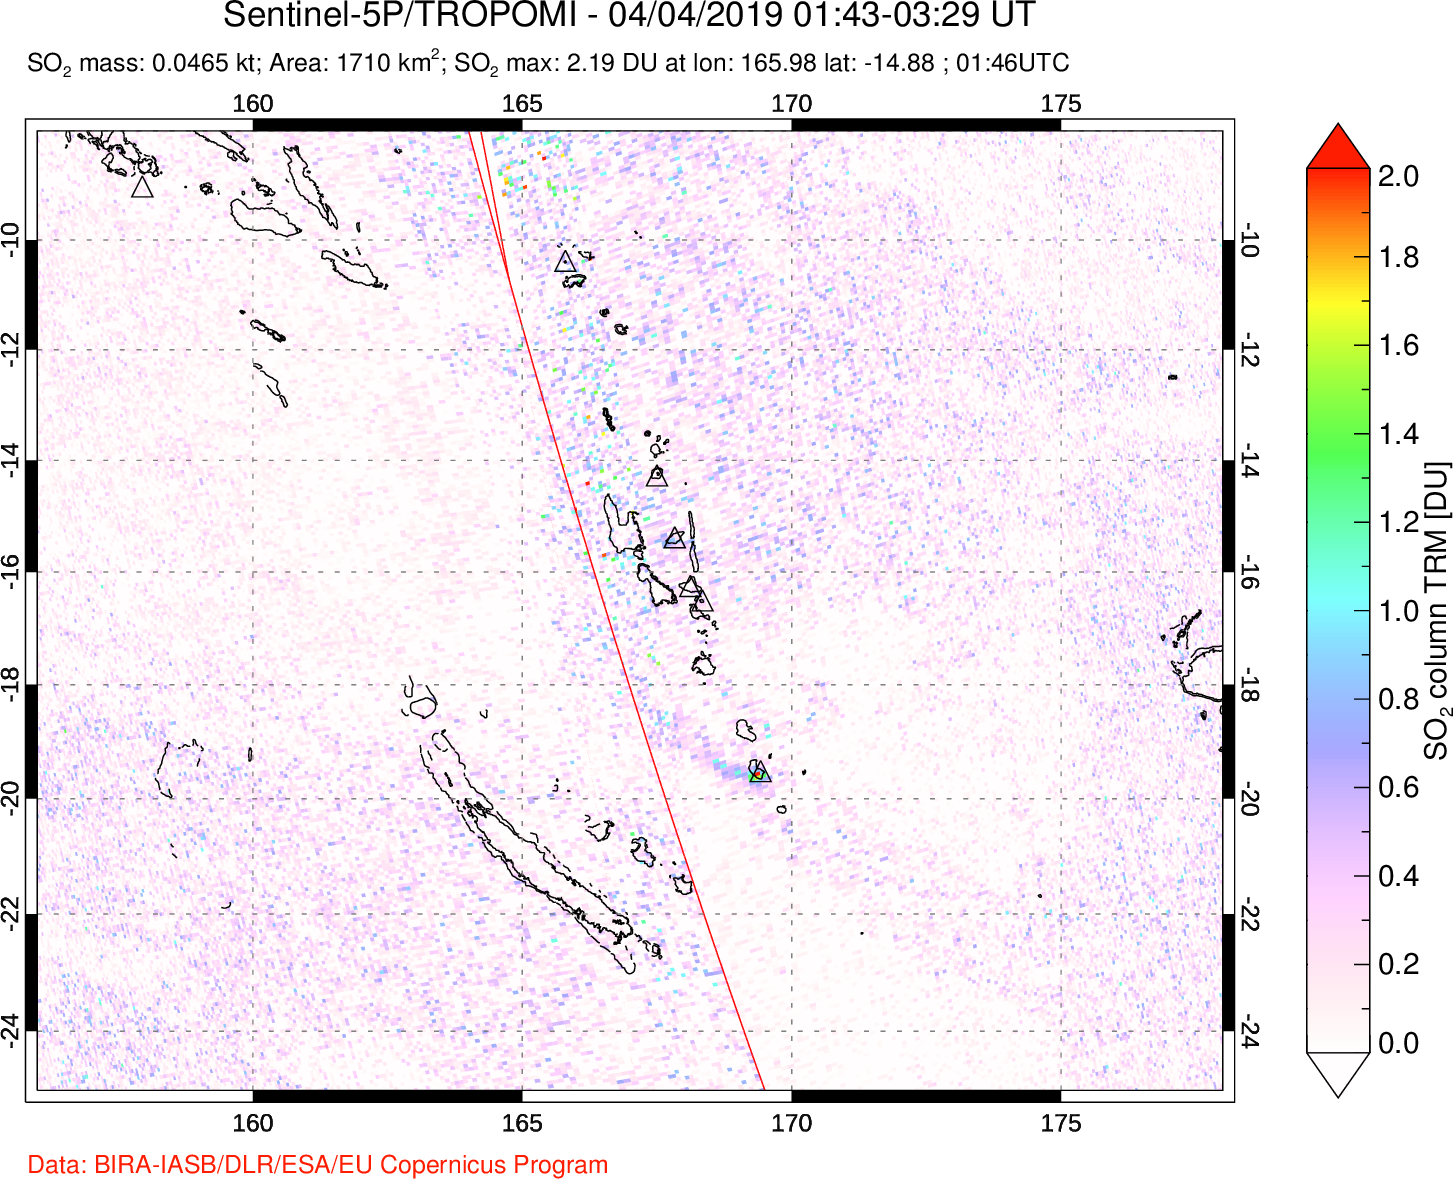 A sulfur dioxide image over Vanuatu, South Pacific on Apr 04, 2019.